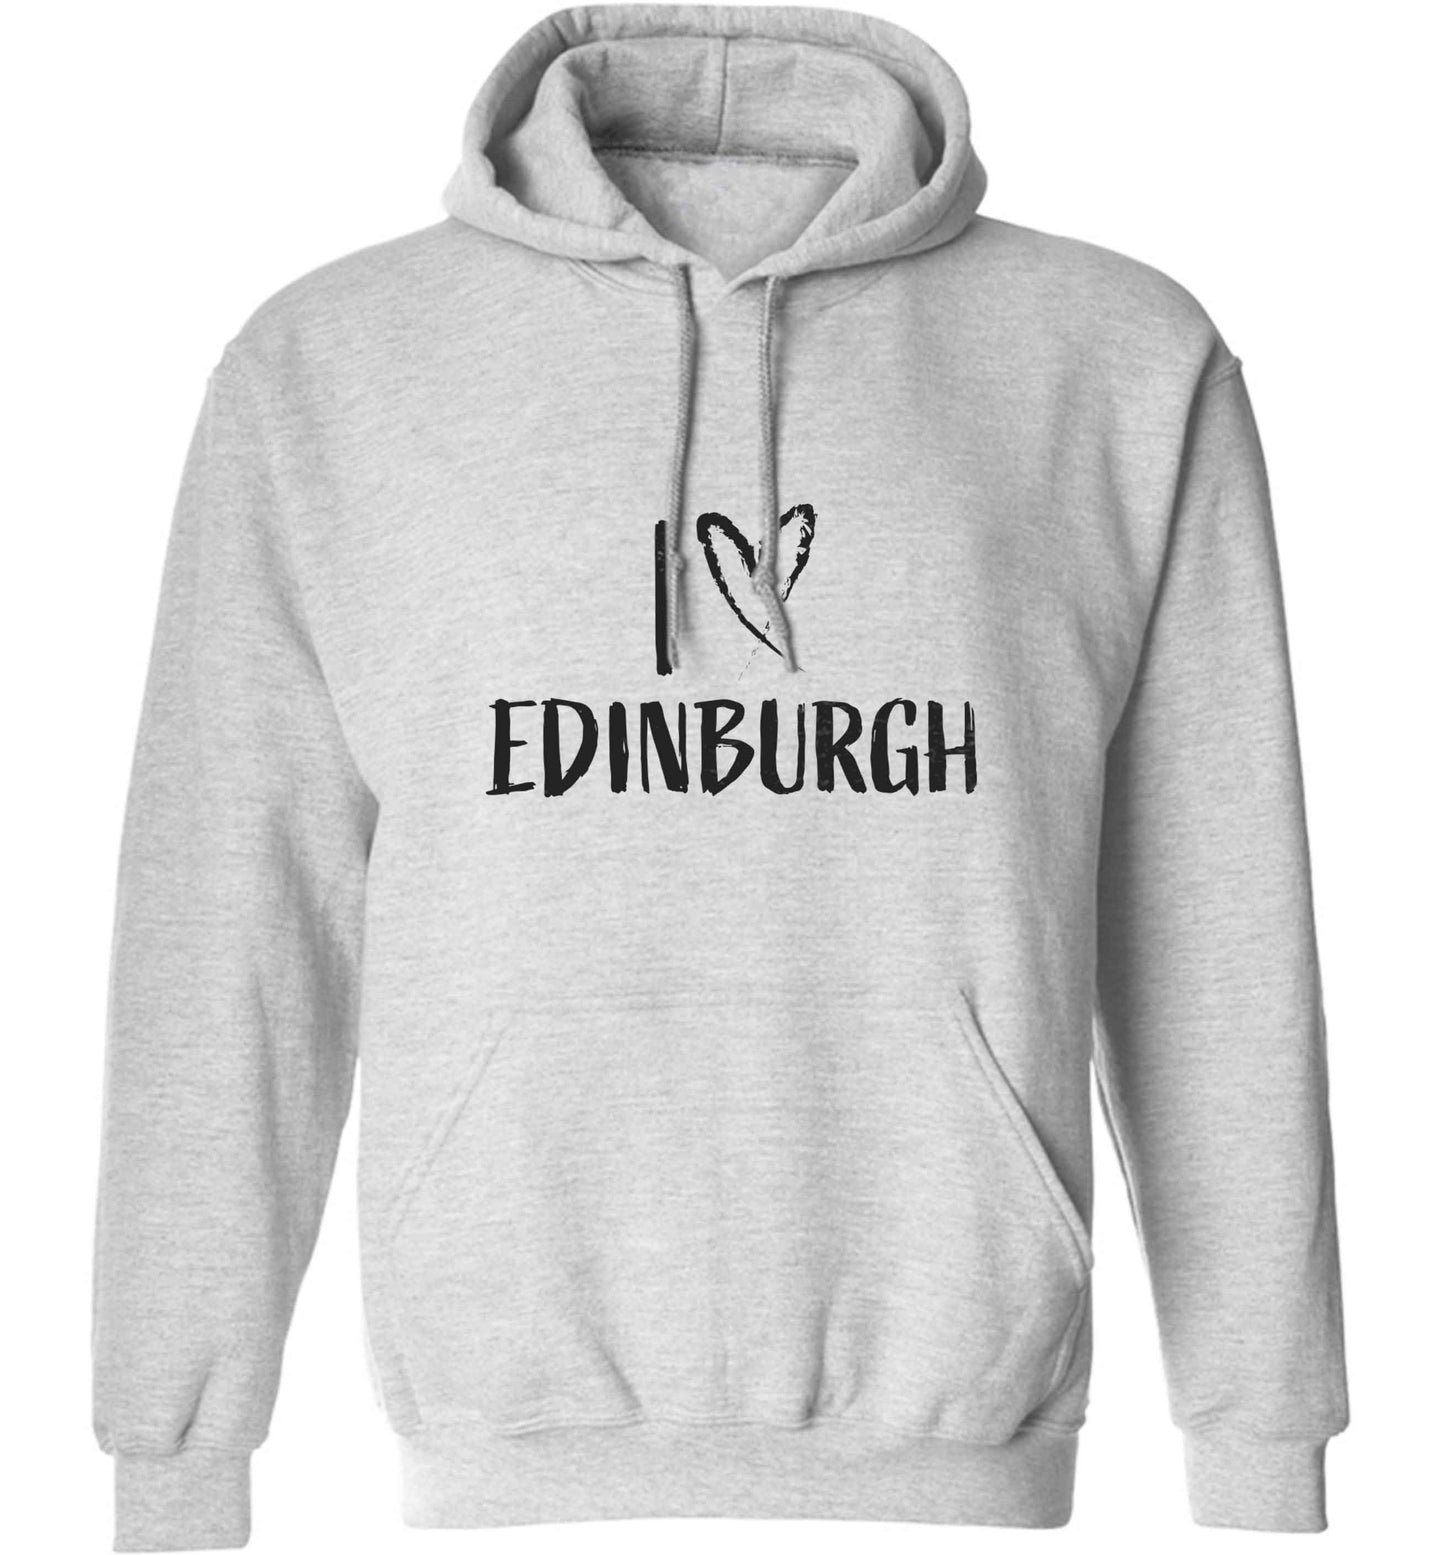 I love Edinburgh adults unisex grey hoodie 2XL